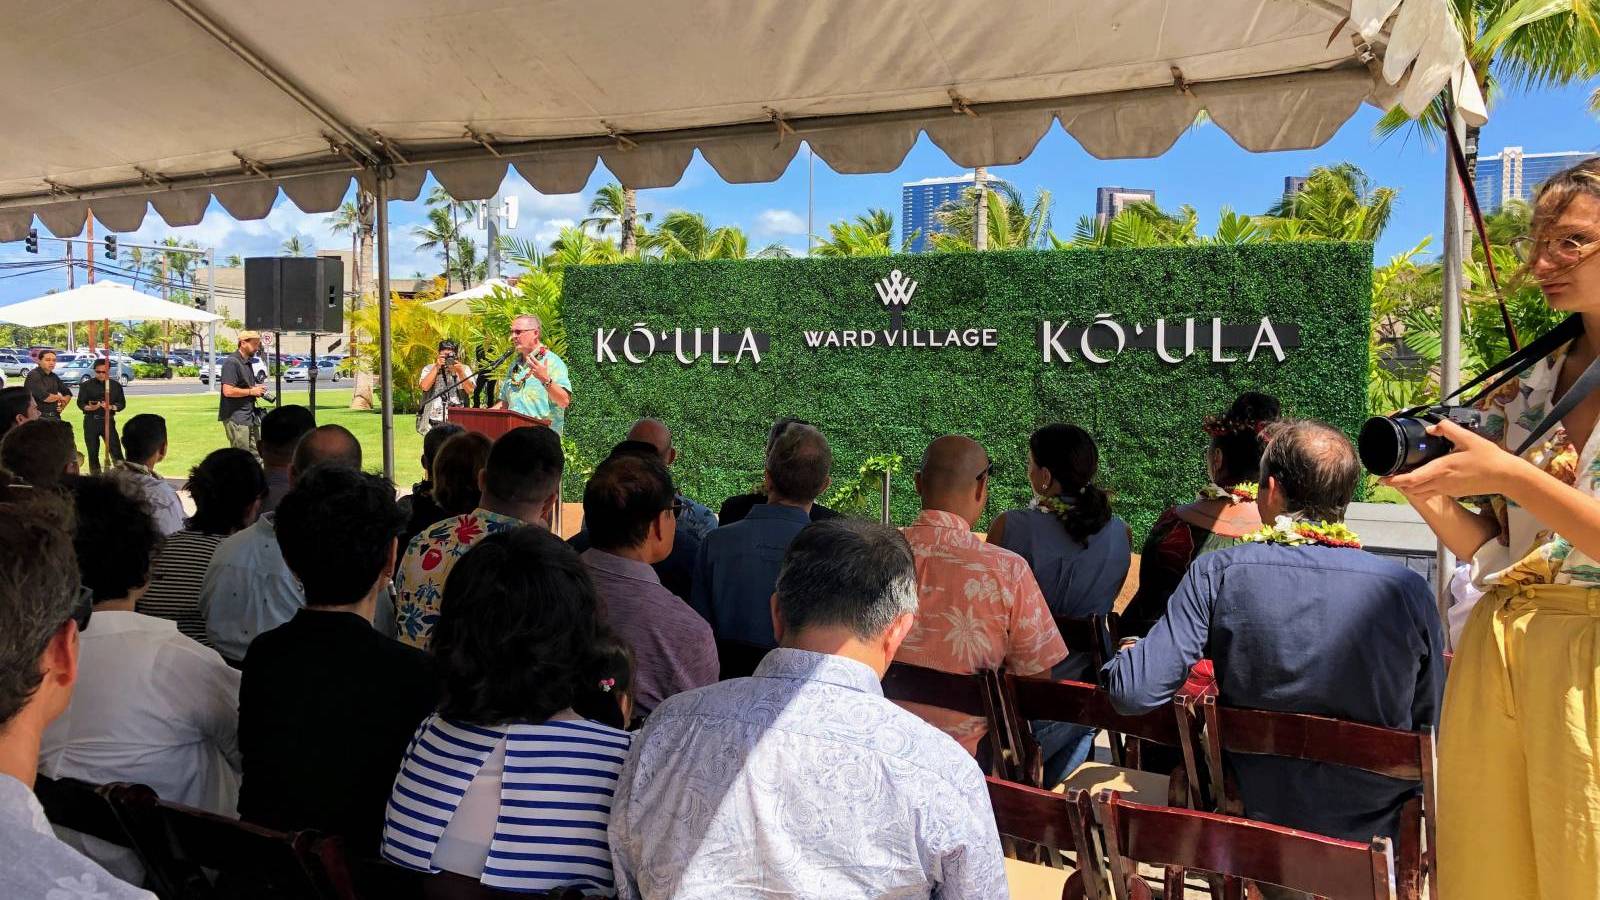 Ko'ula Groundbreaking - Newest Condo at Ward Village in Honolulu - Hawaii  Real Estate Market & Trends